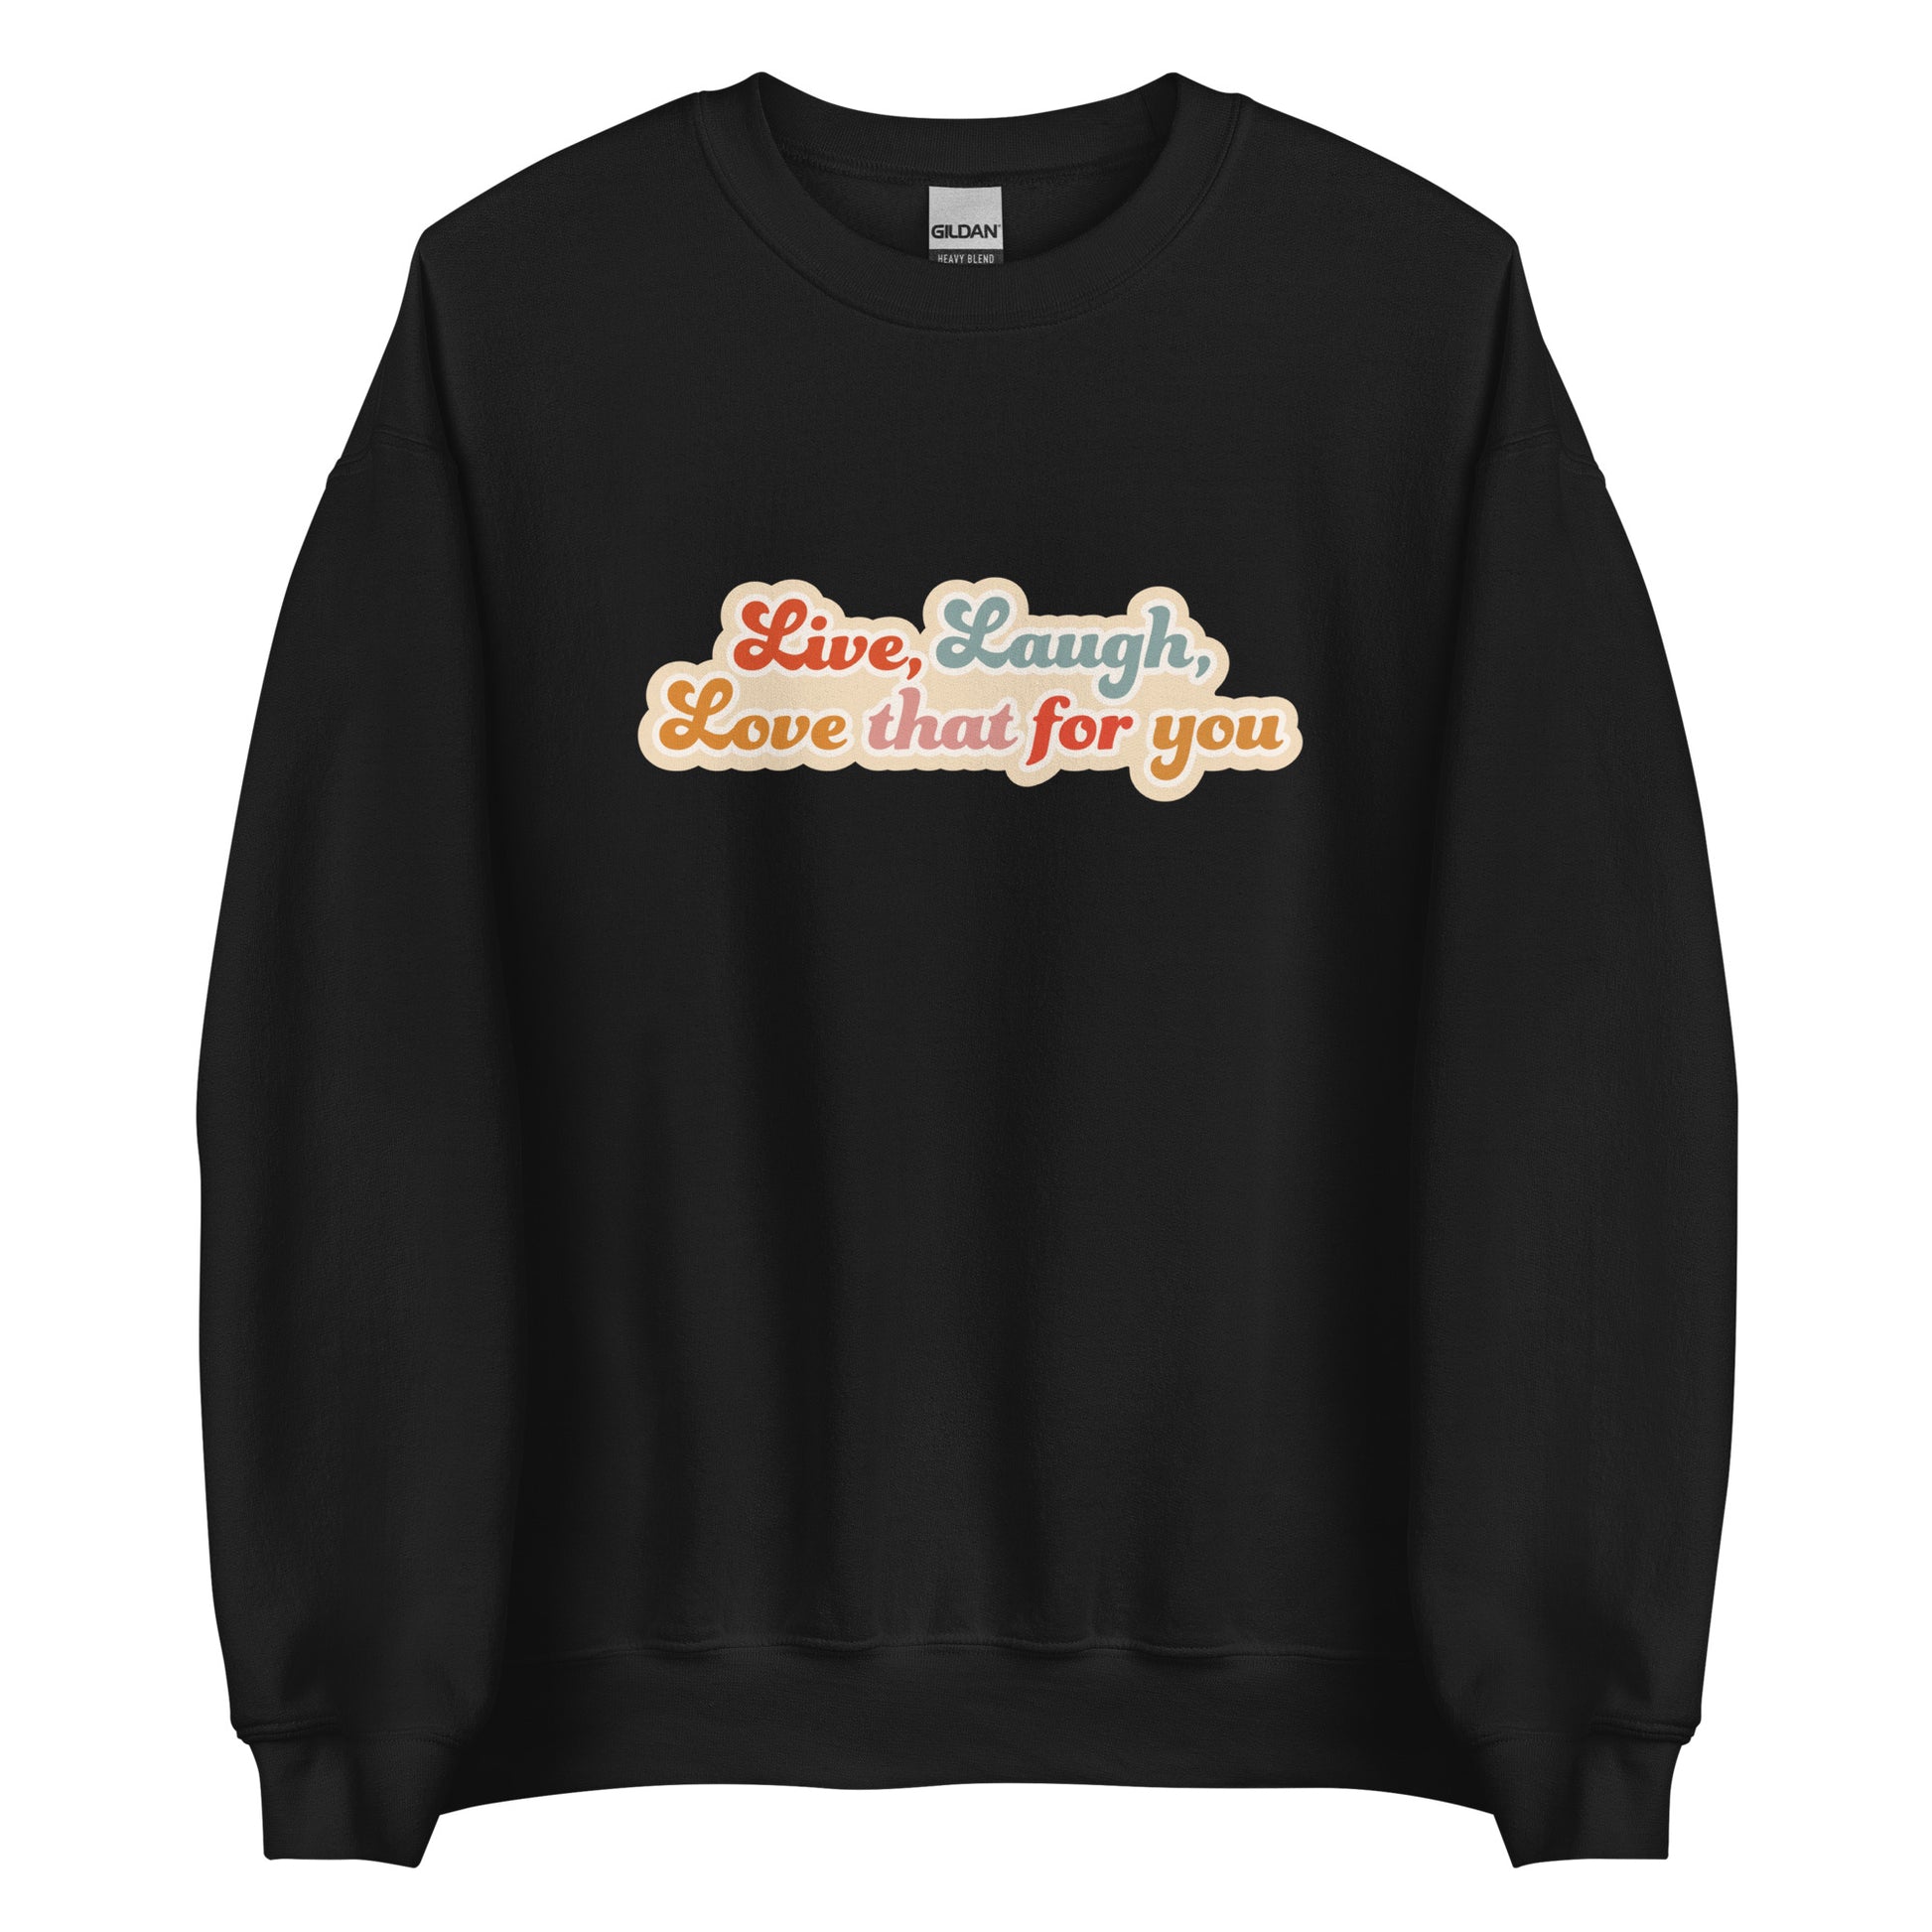 A black crewneck sweatshirt featuring colorful, cursive text that reads "Live, Laugh, Love that for you"